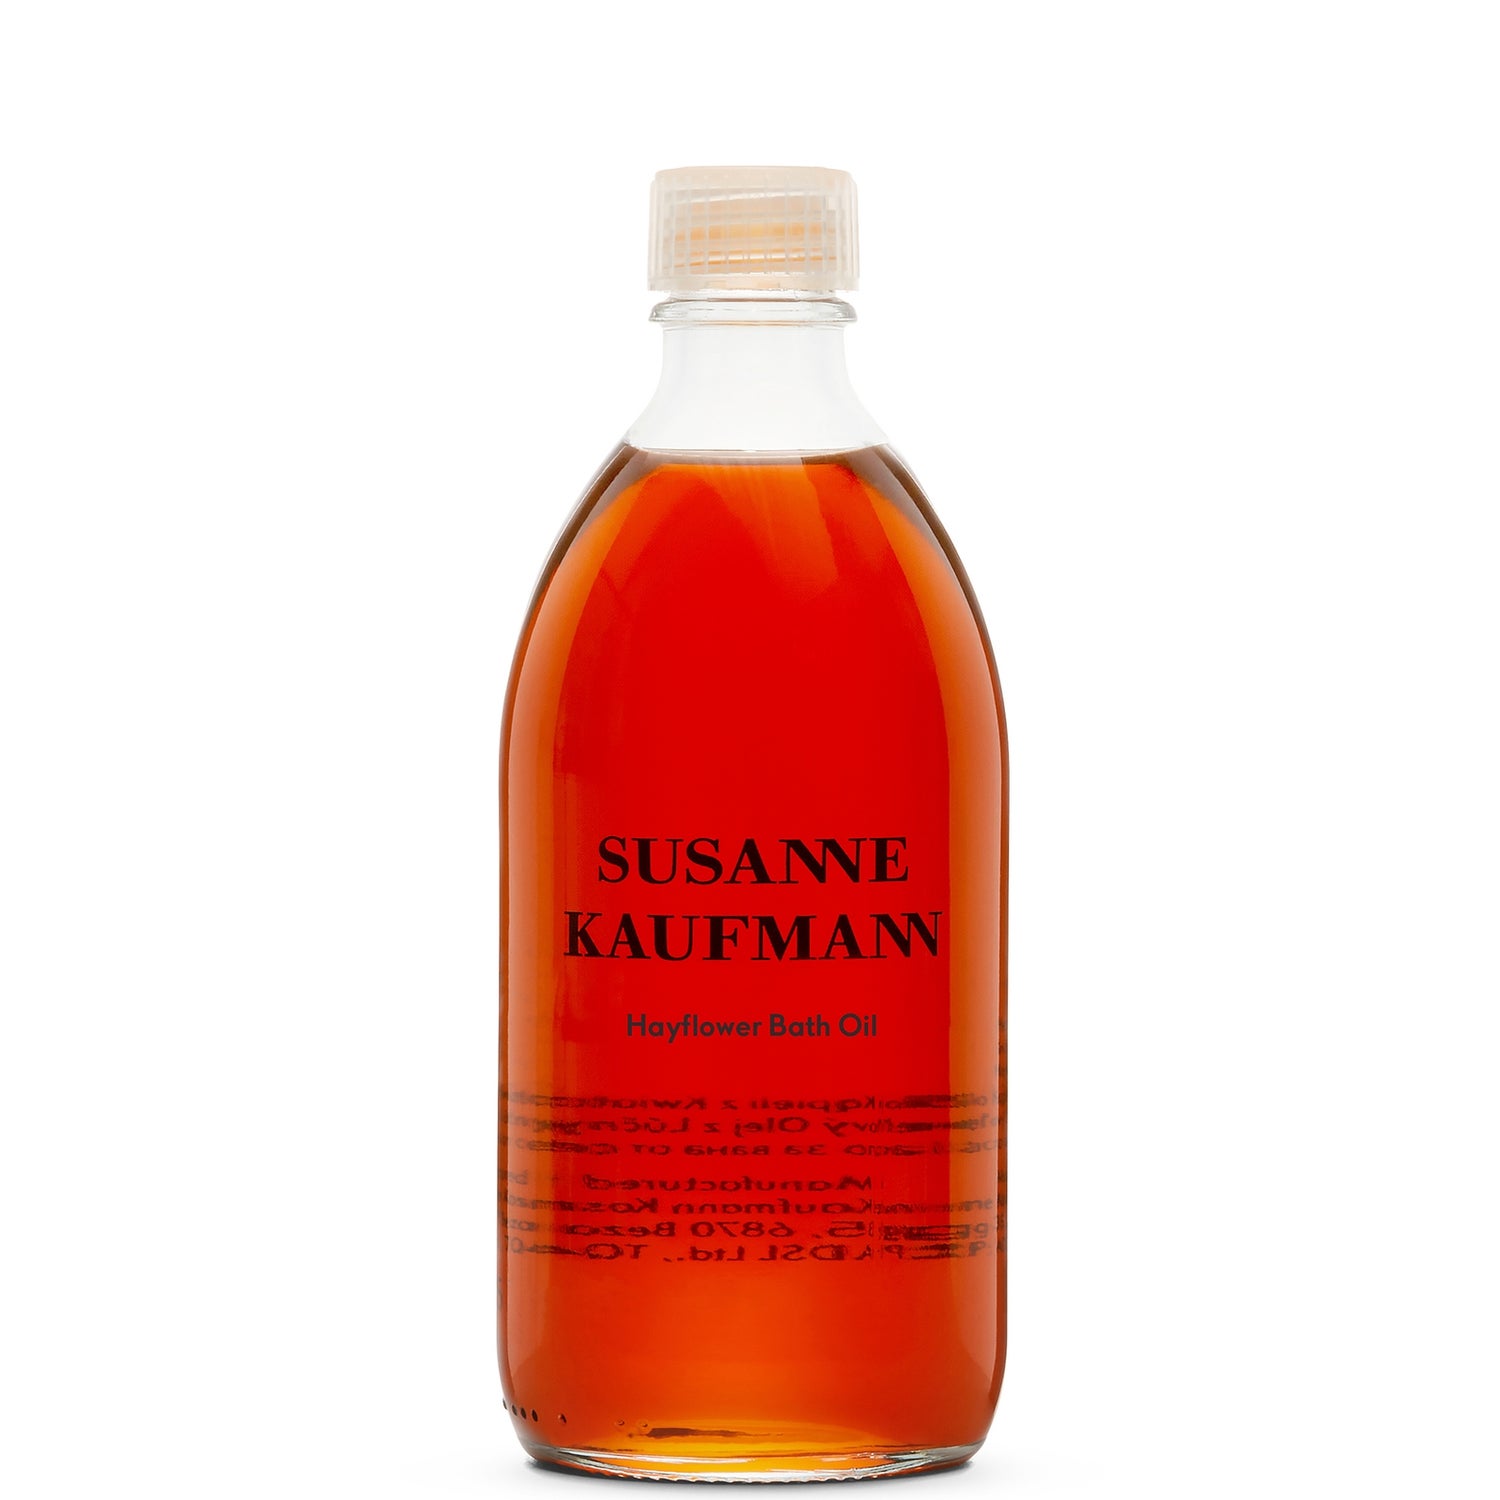 SUSANNE KAUFMANN Hayflower Bath Oil 250ml